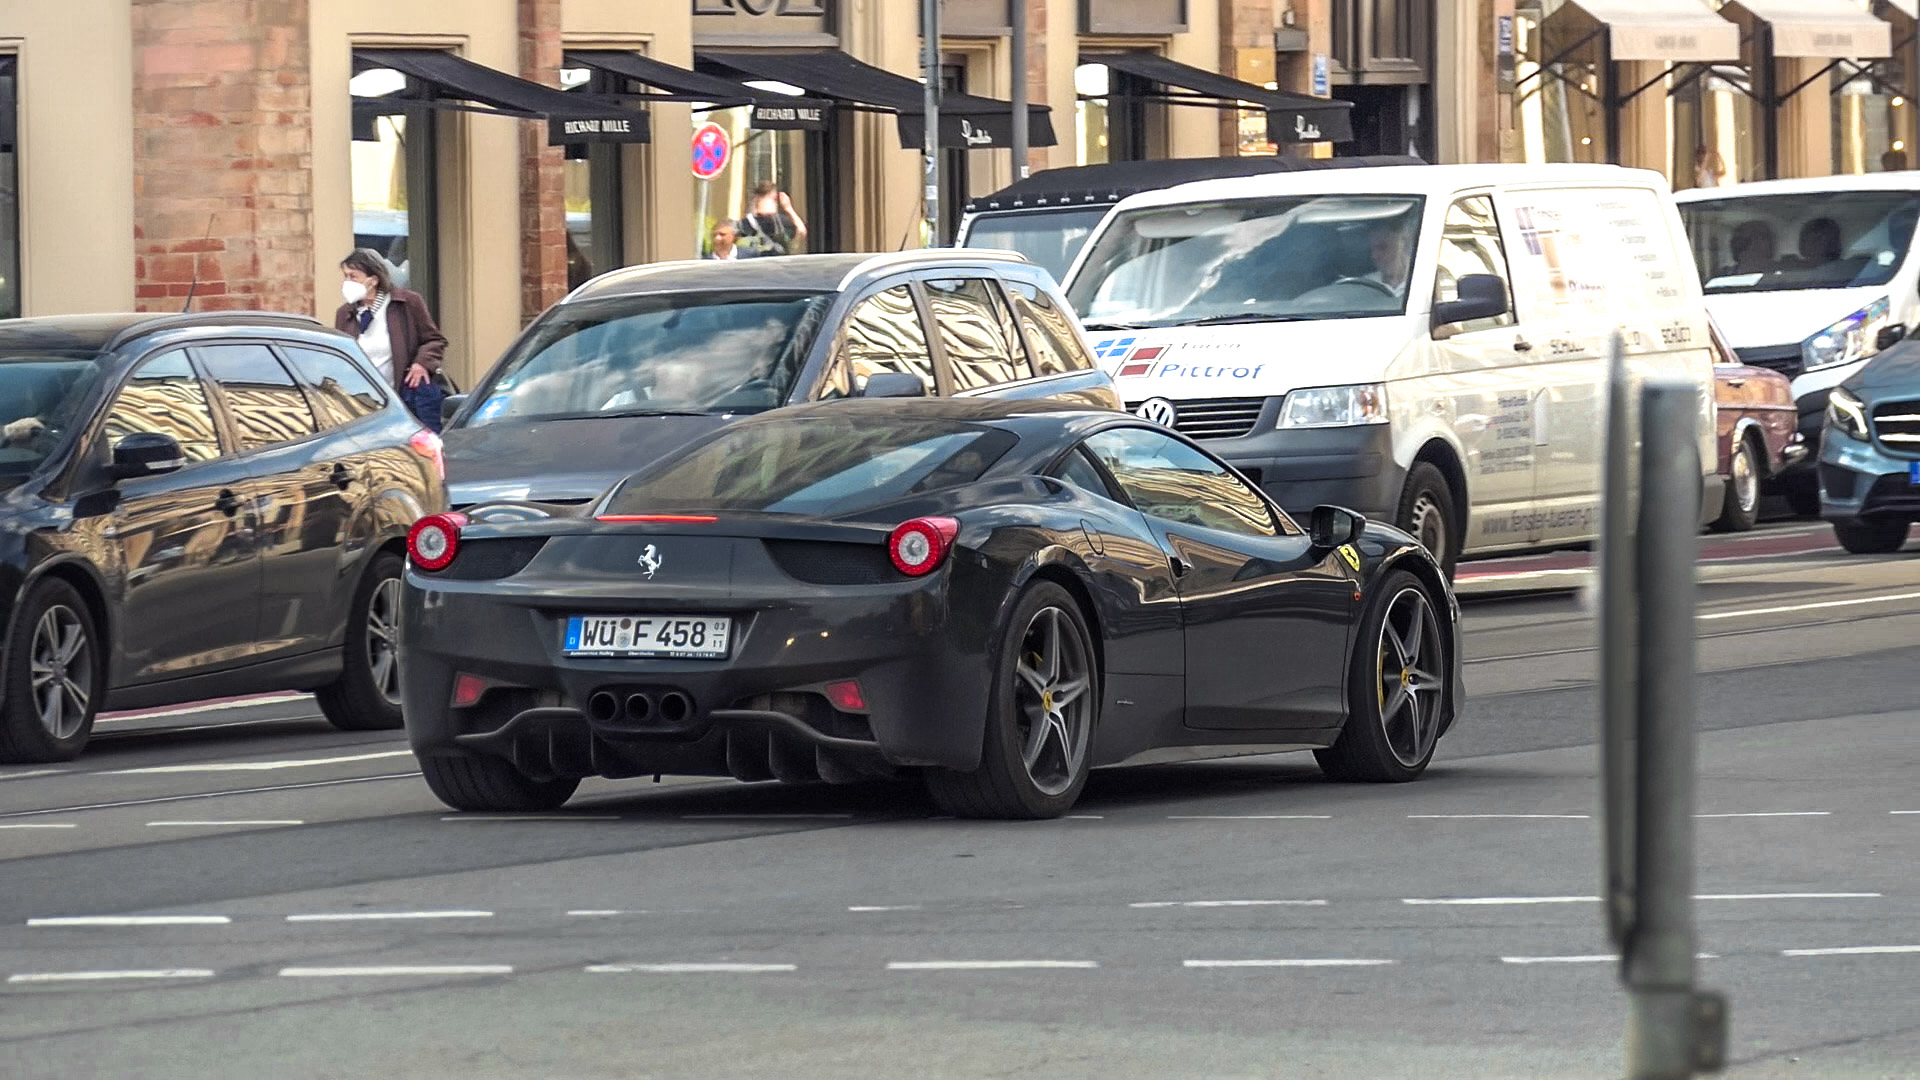 Ferrari 458 Italia - WÜ-F-458